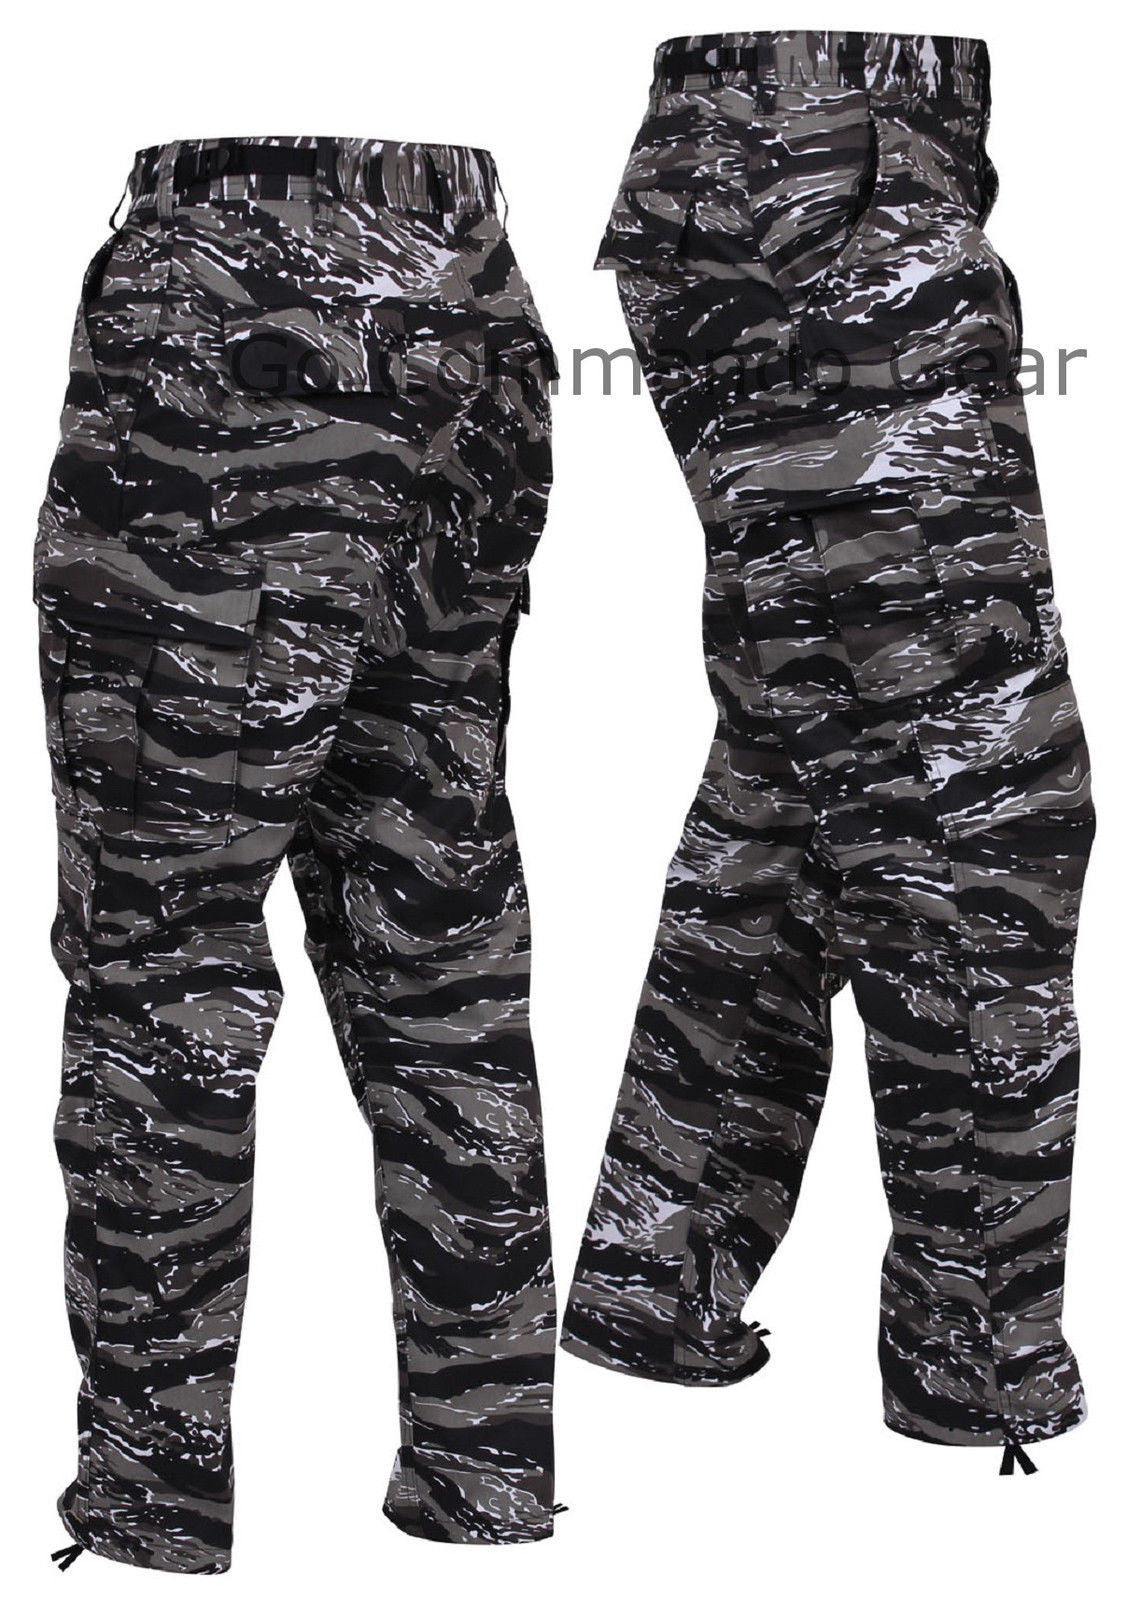 Men's Urban Tiger Stripe Camo BDU Pants - Military Tactical Uniform St ...